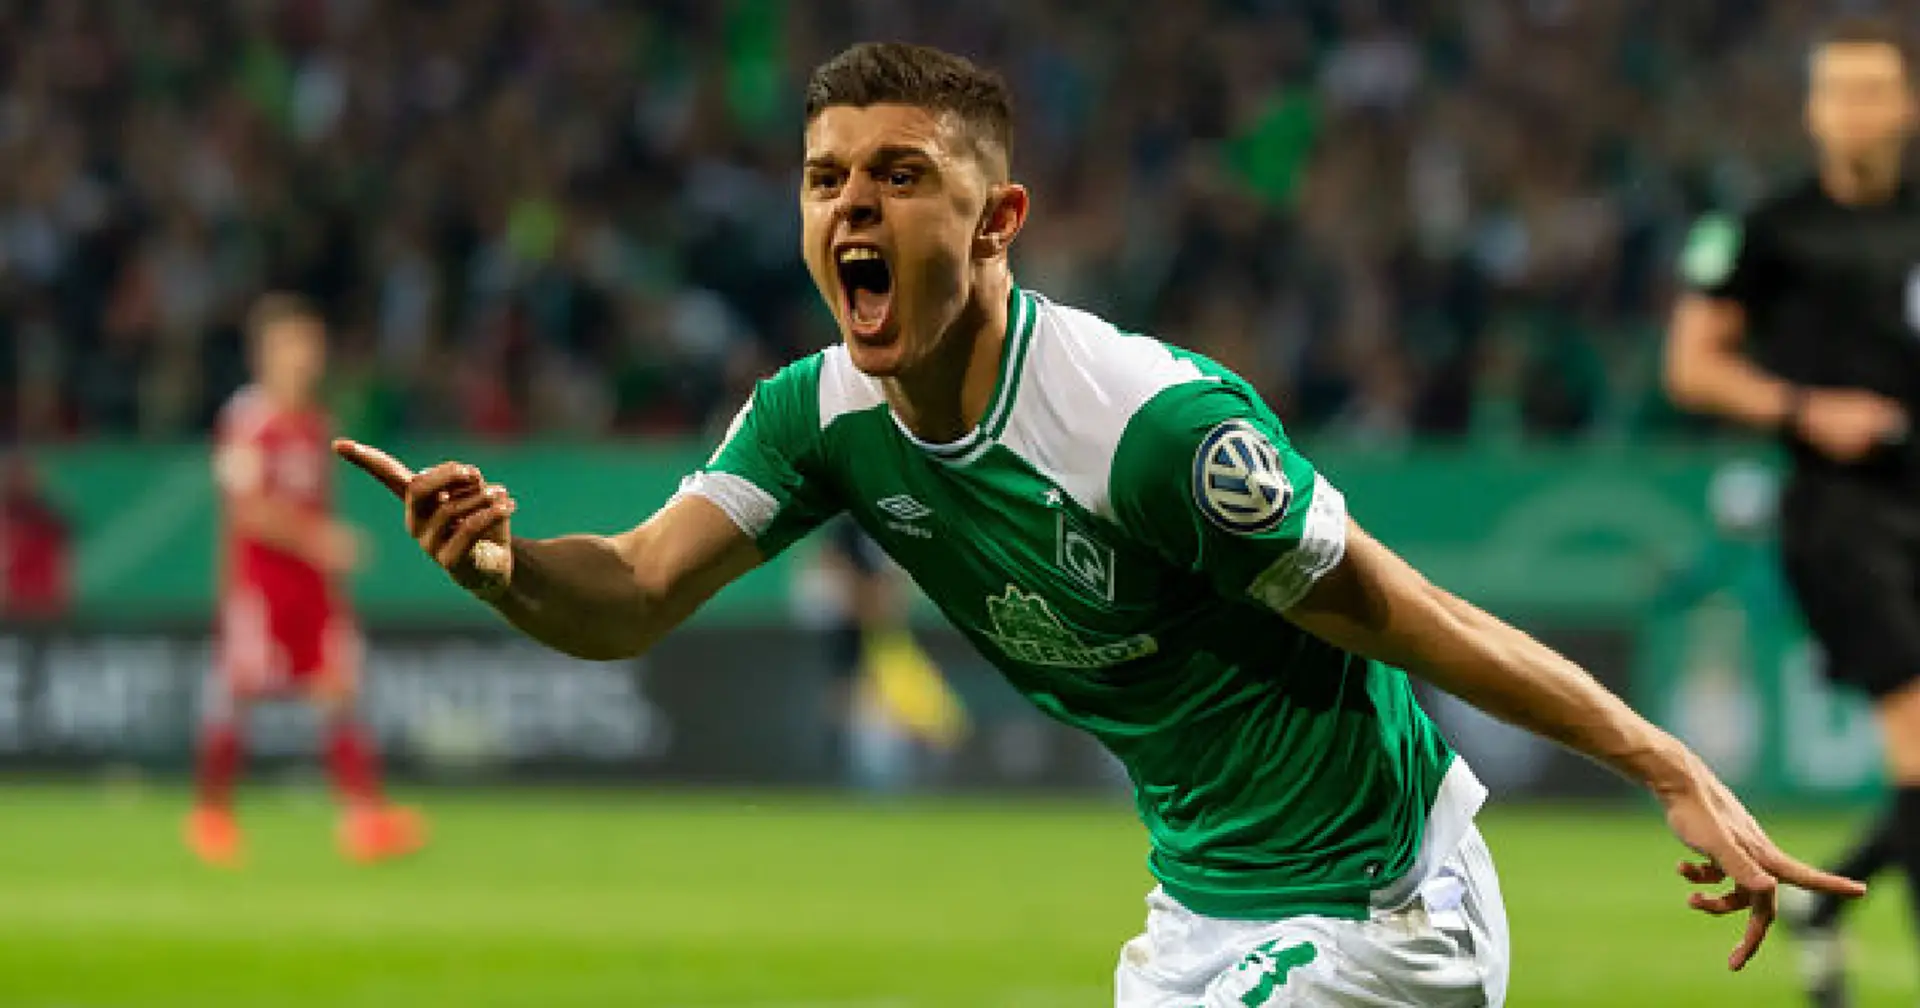 Jurgen Klopp reportedly interested in young Werder Bremen talent Milot Rashica